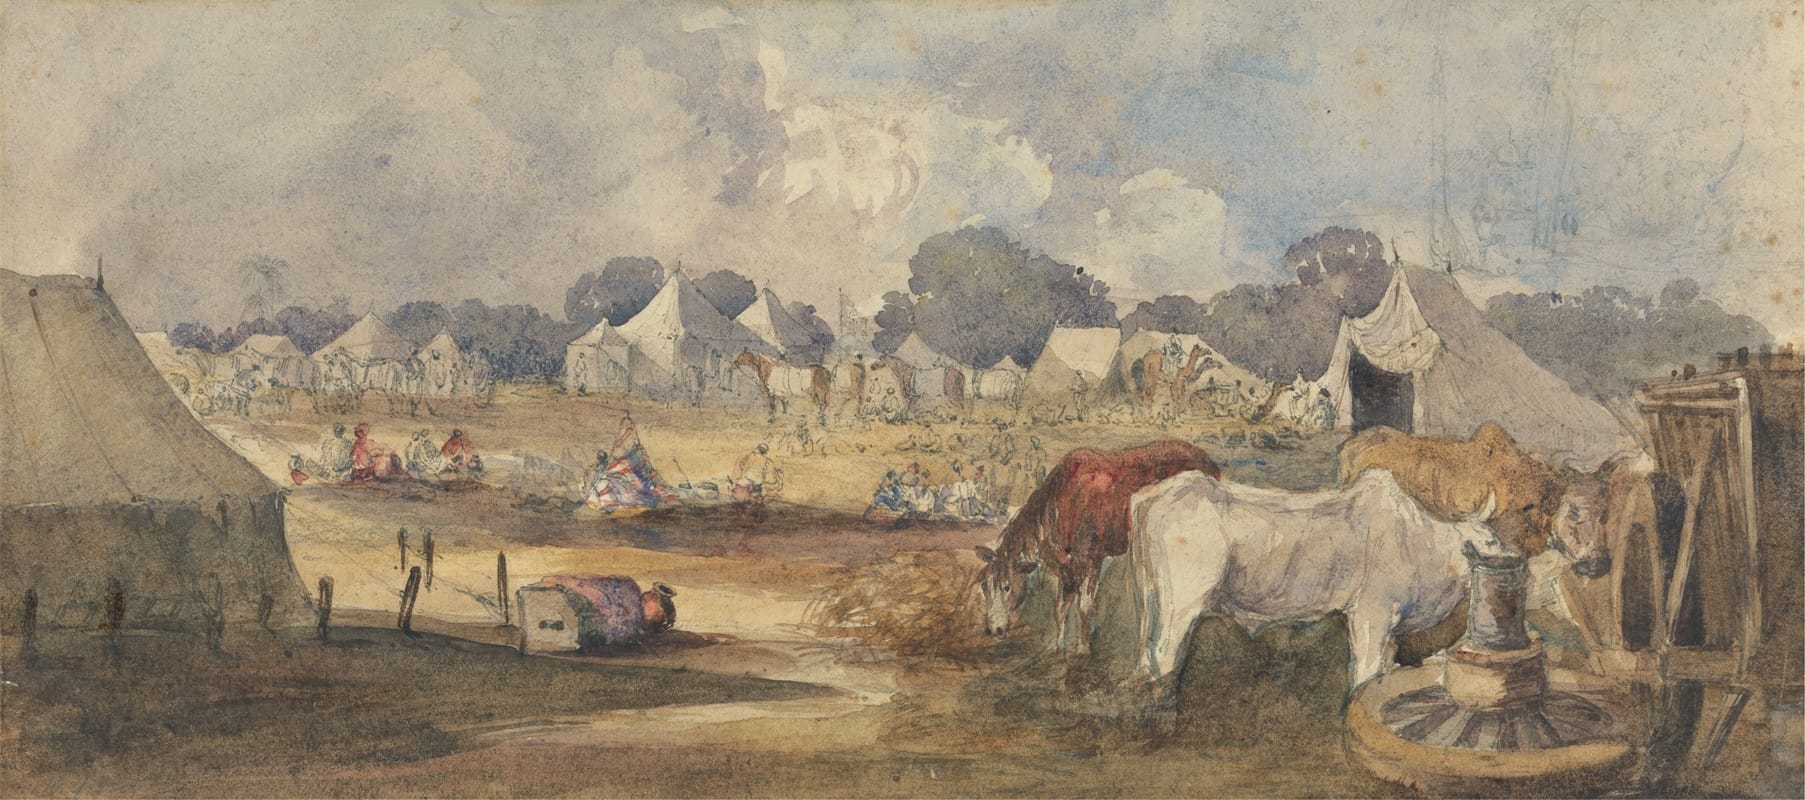 William James Müller - An Eastern Encampment